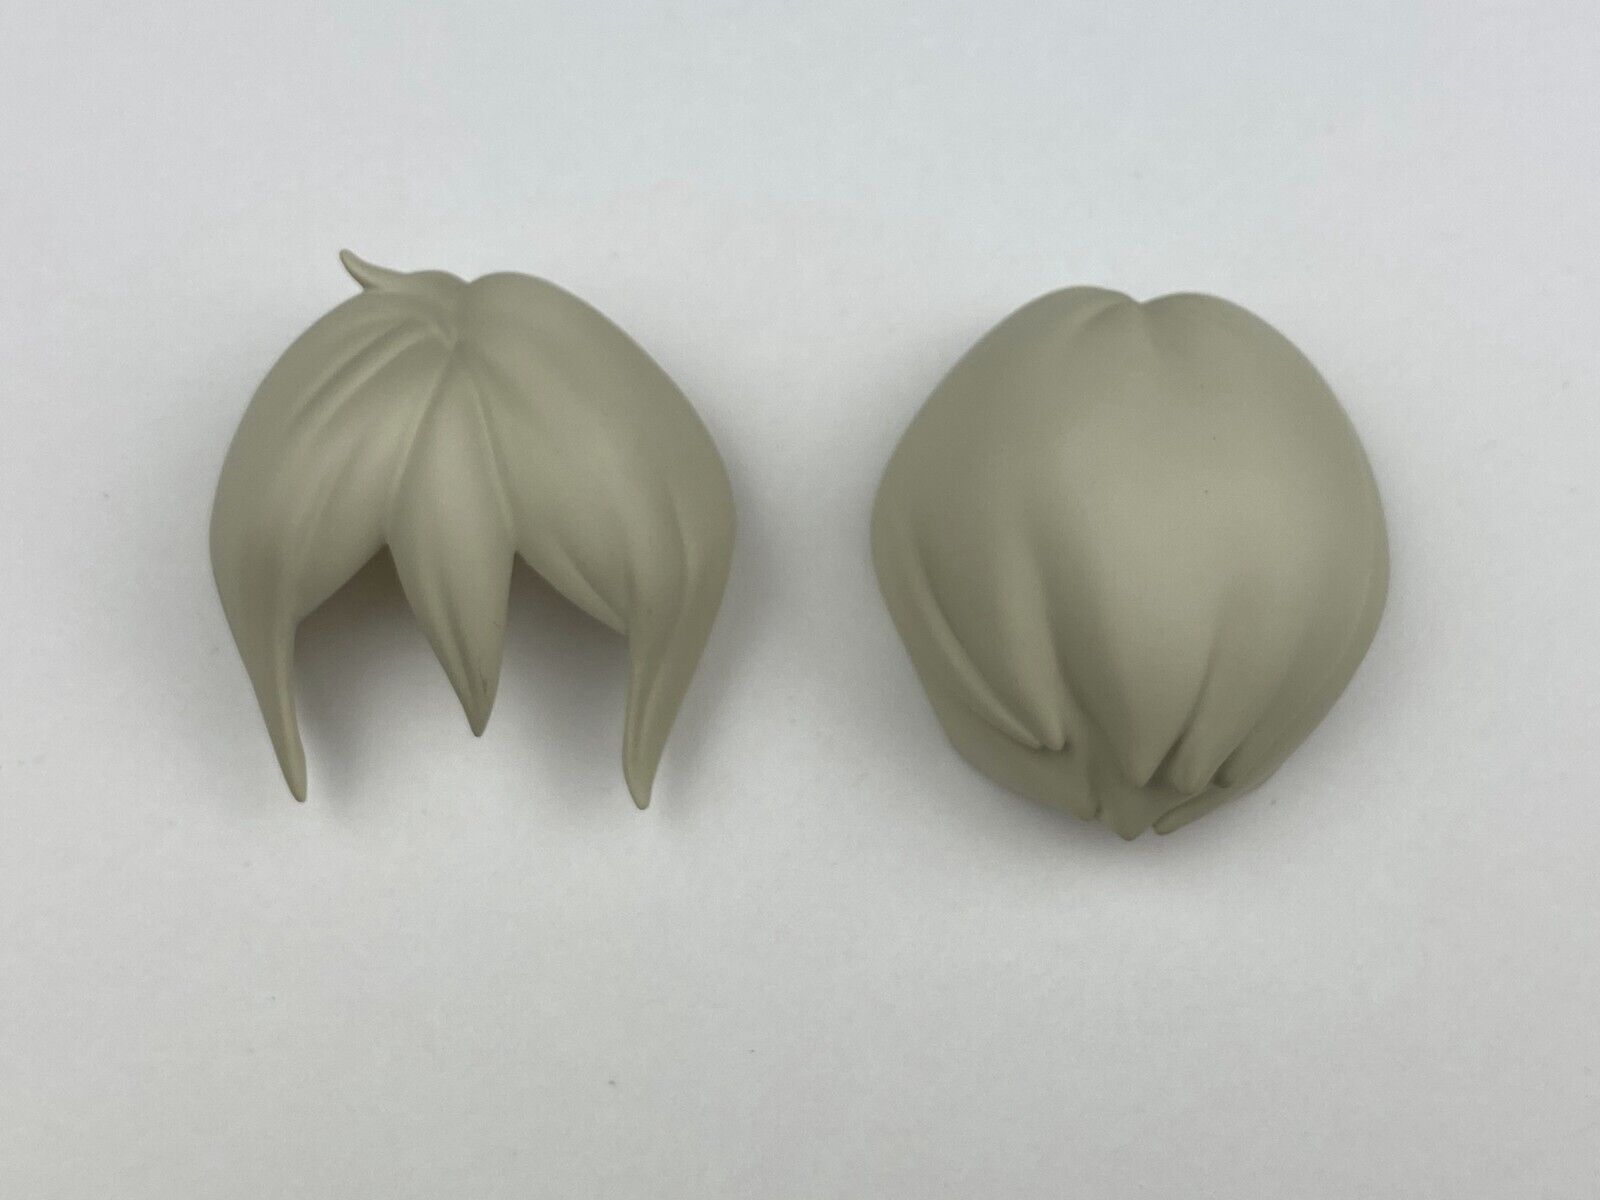 Nendoroid hair parts: long and short, many options - GSC Nendoroid split parts